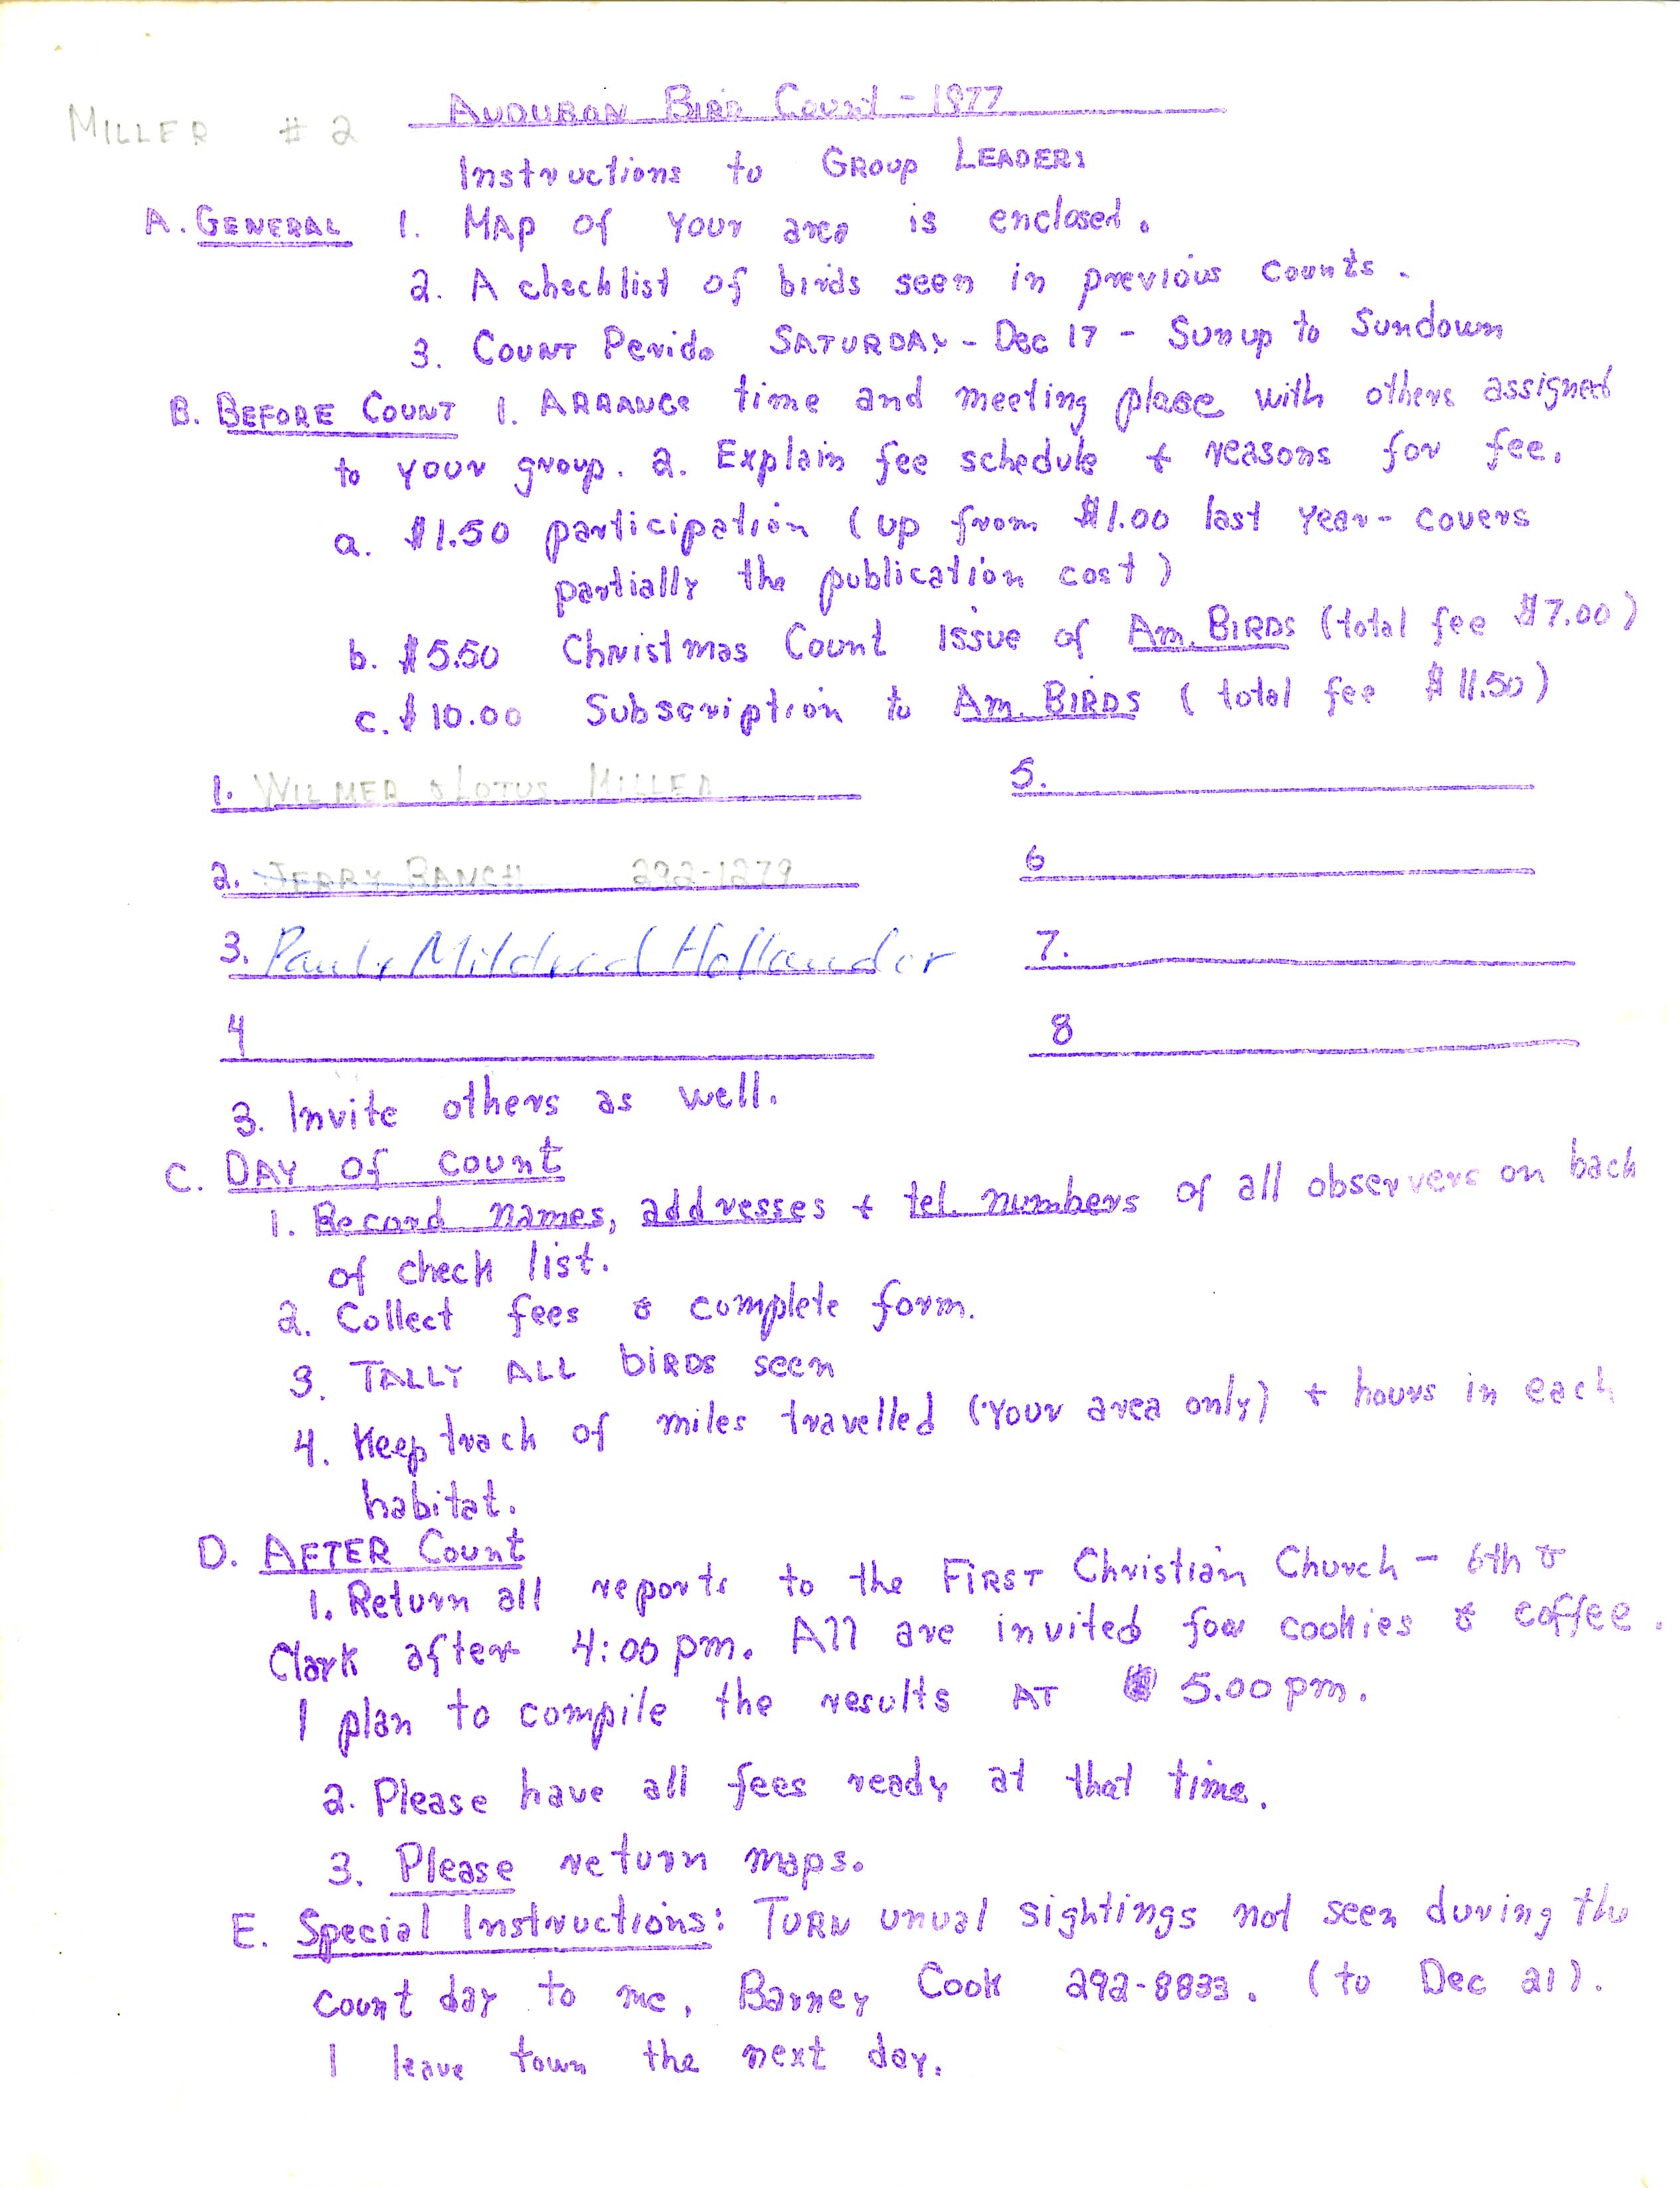 Documents regarding the 1977 Ames Audubon Christmas Bird Count